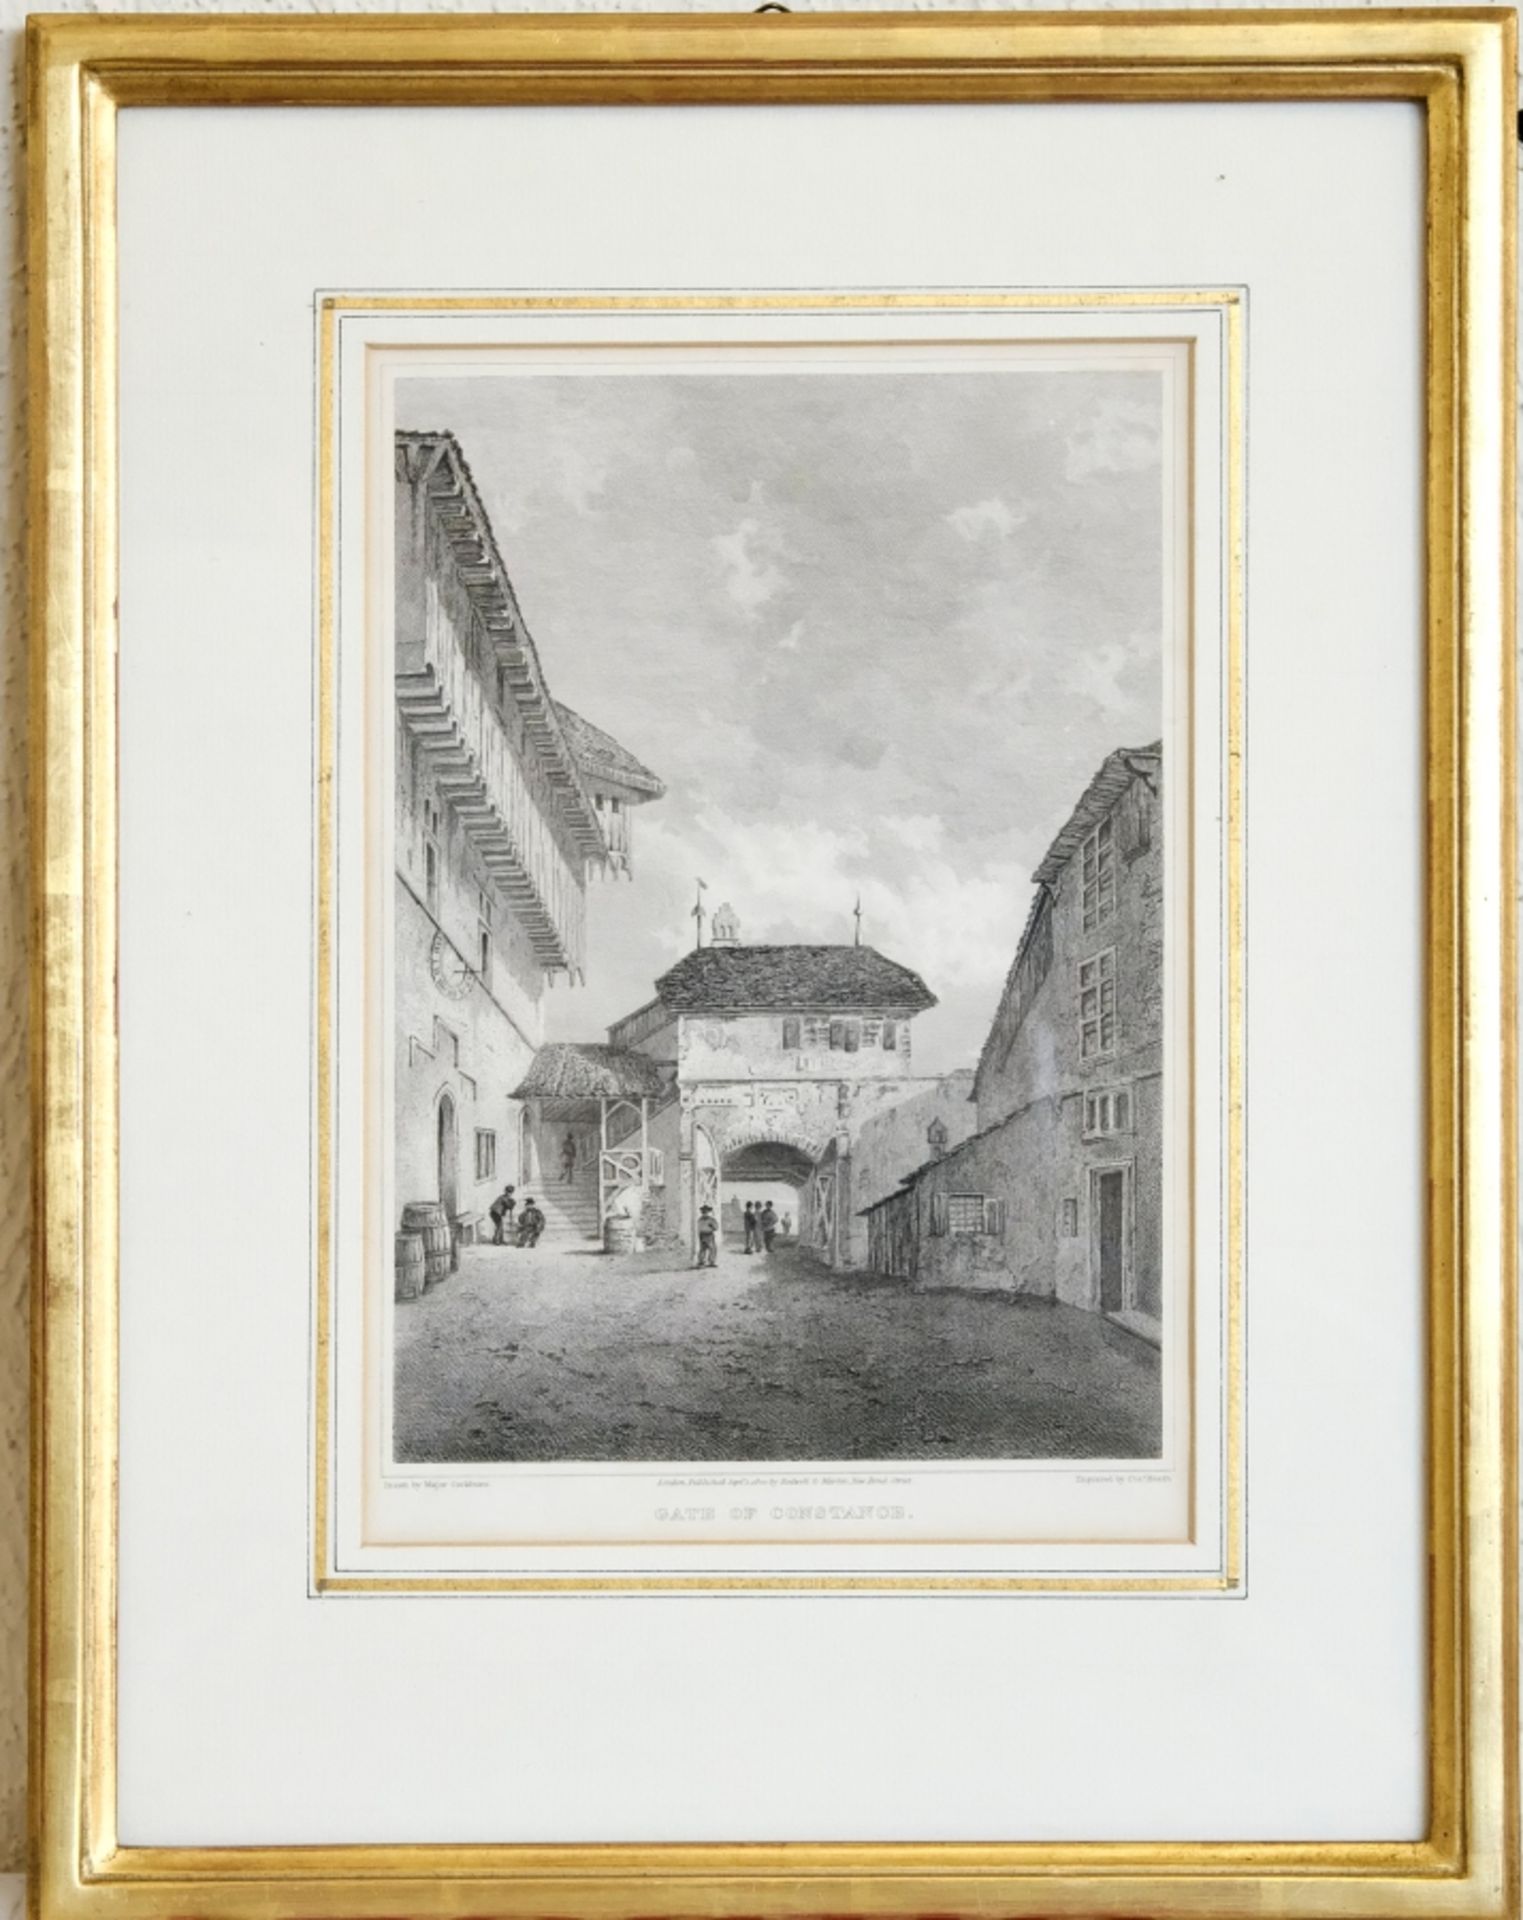 KONSTANZ, "Gate of Constance", Stahlstich um 1840, 23x17cm (Abb. in PP), R:36x28cm. - Image 2 of 3